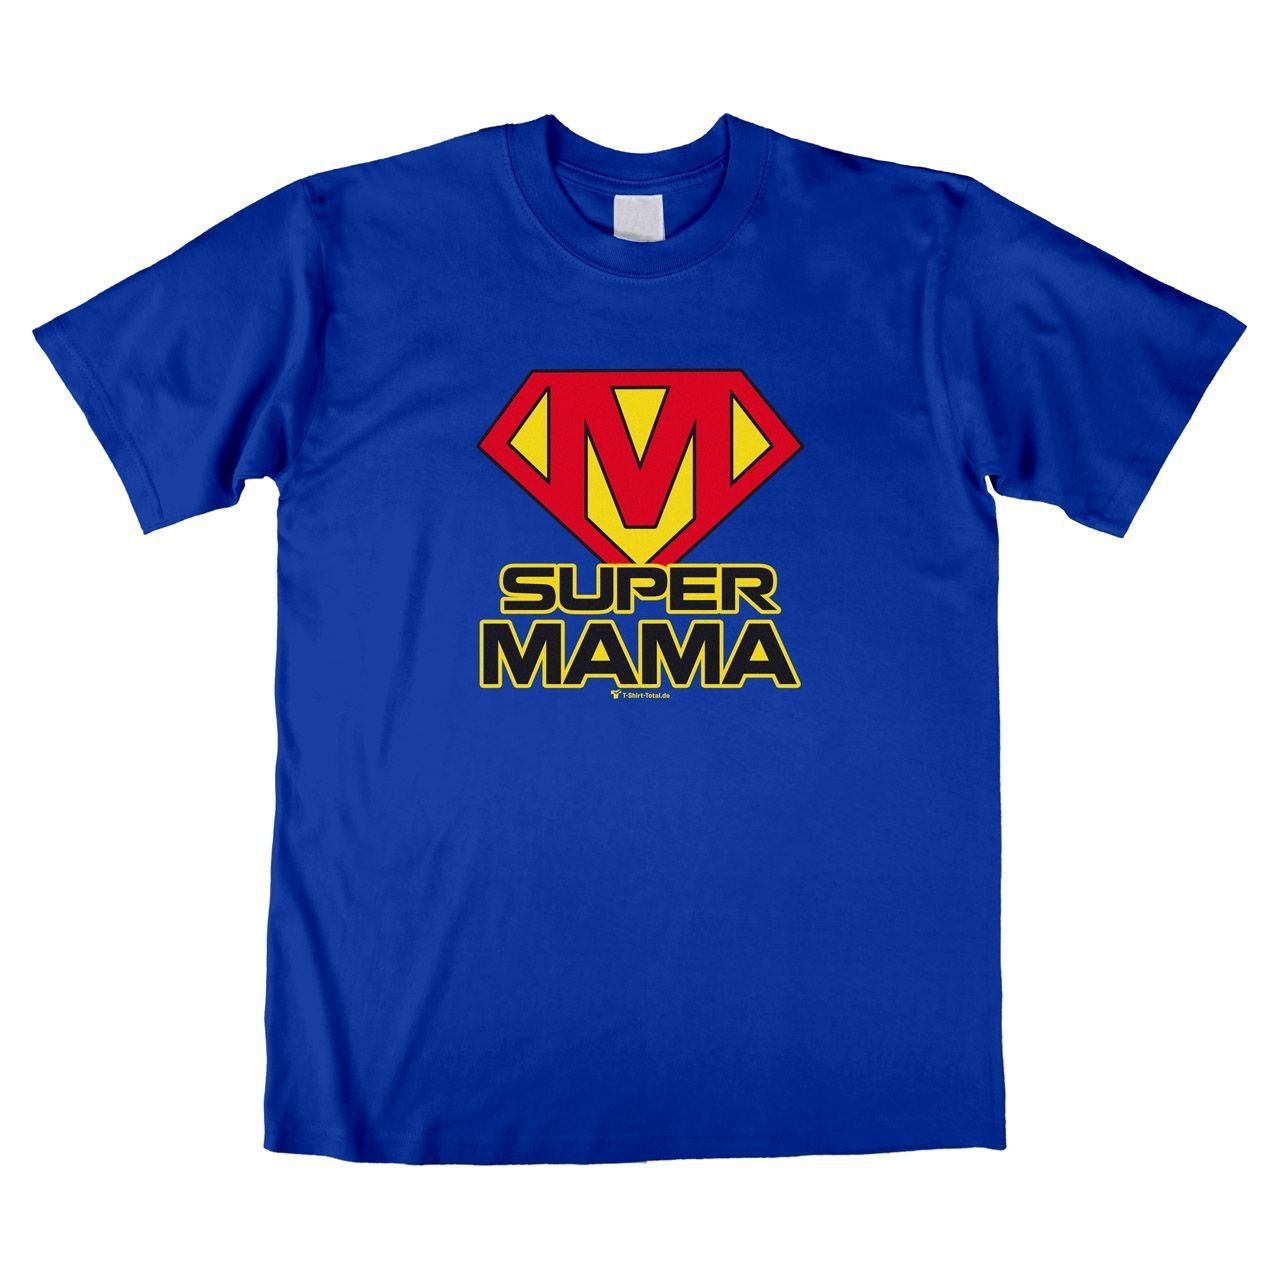 Super Mama Unisex T-Shirt royal Small